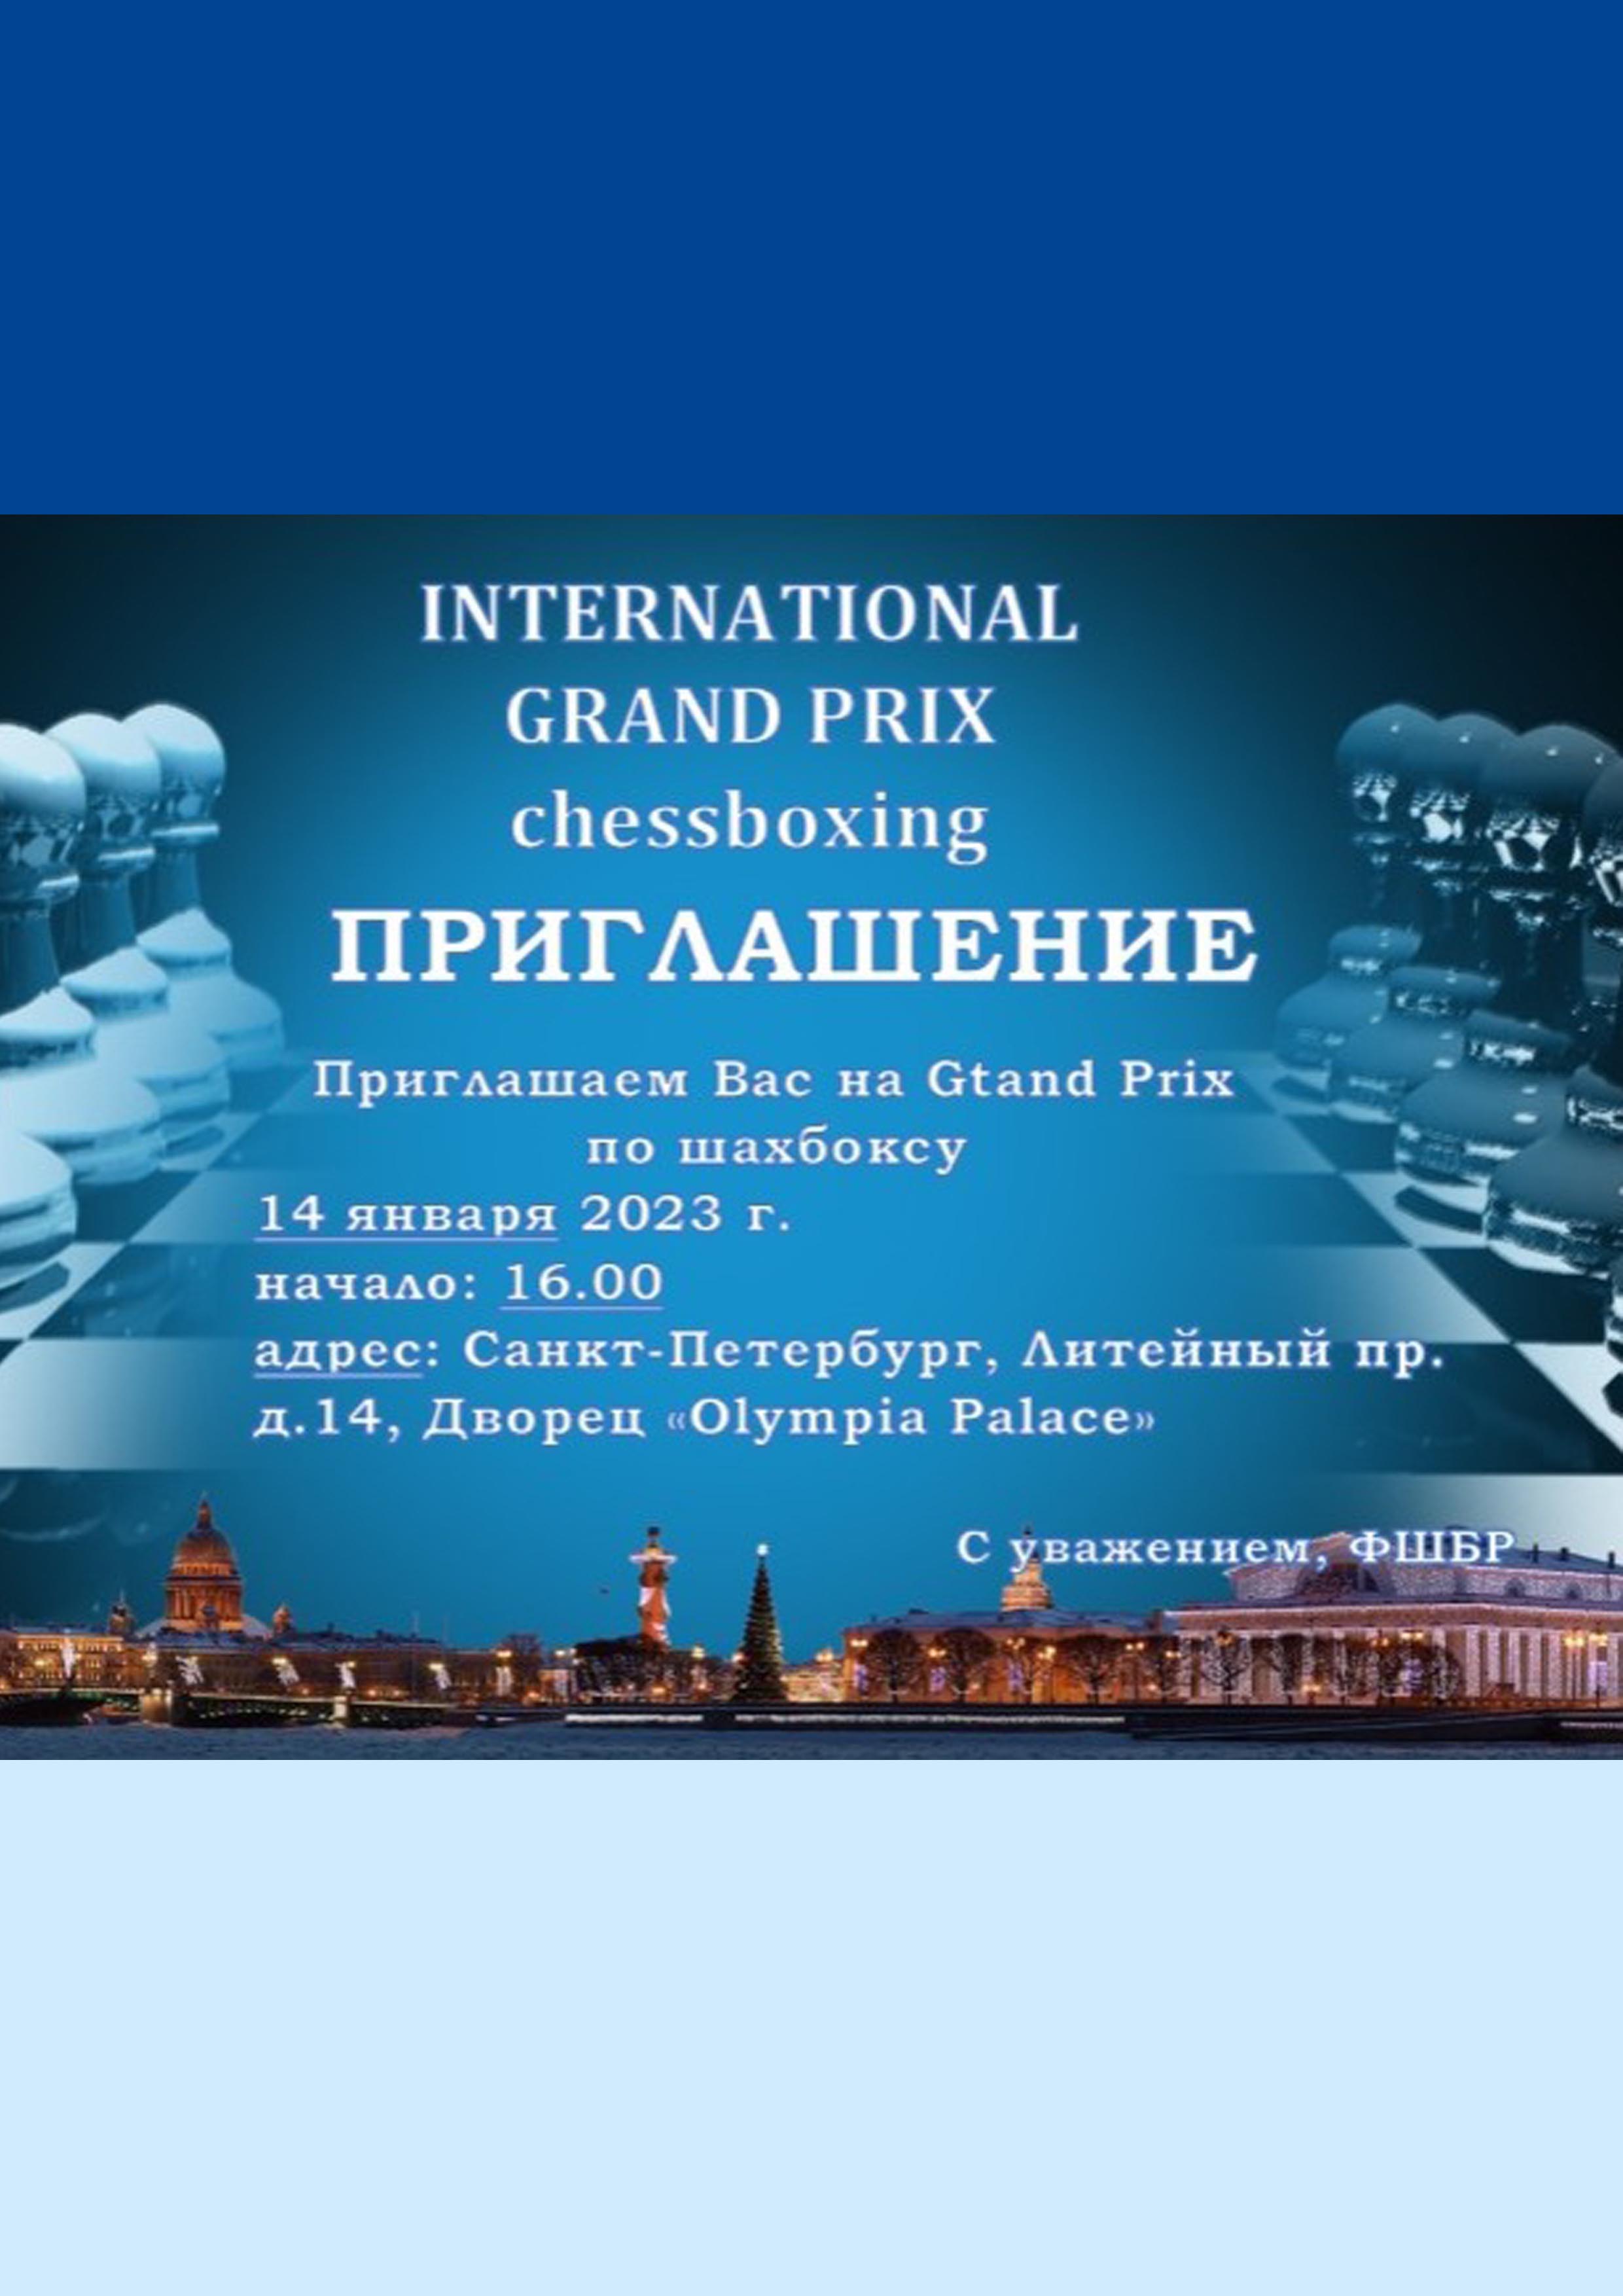 International GRAND PRIX CHESSBOXING 14  - январындагы
 2023  - жыл
